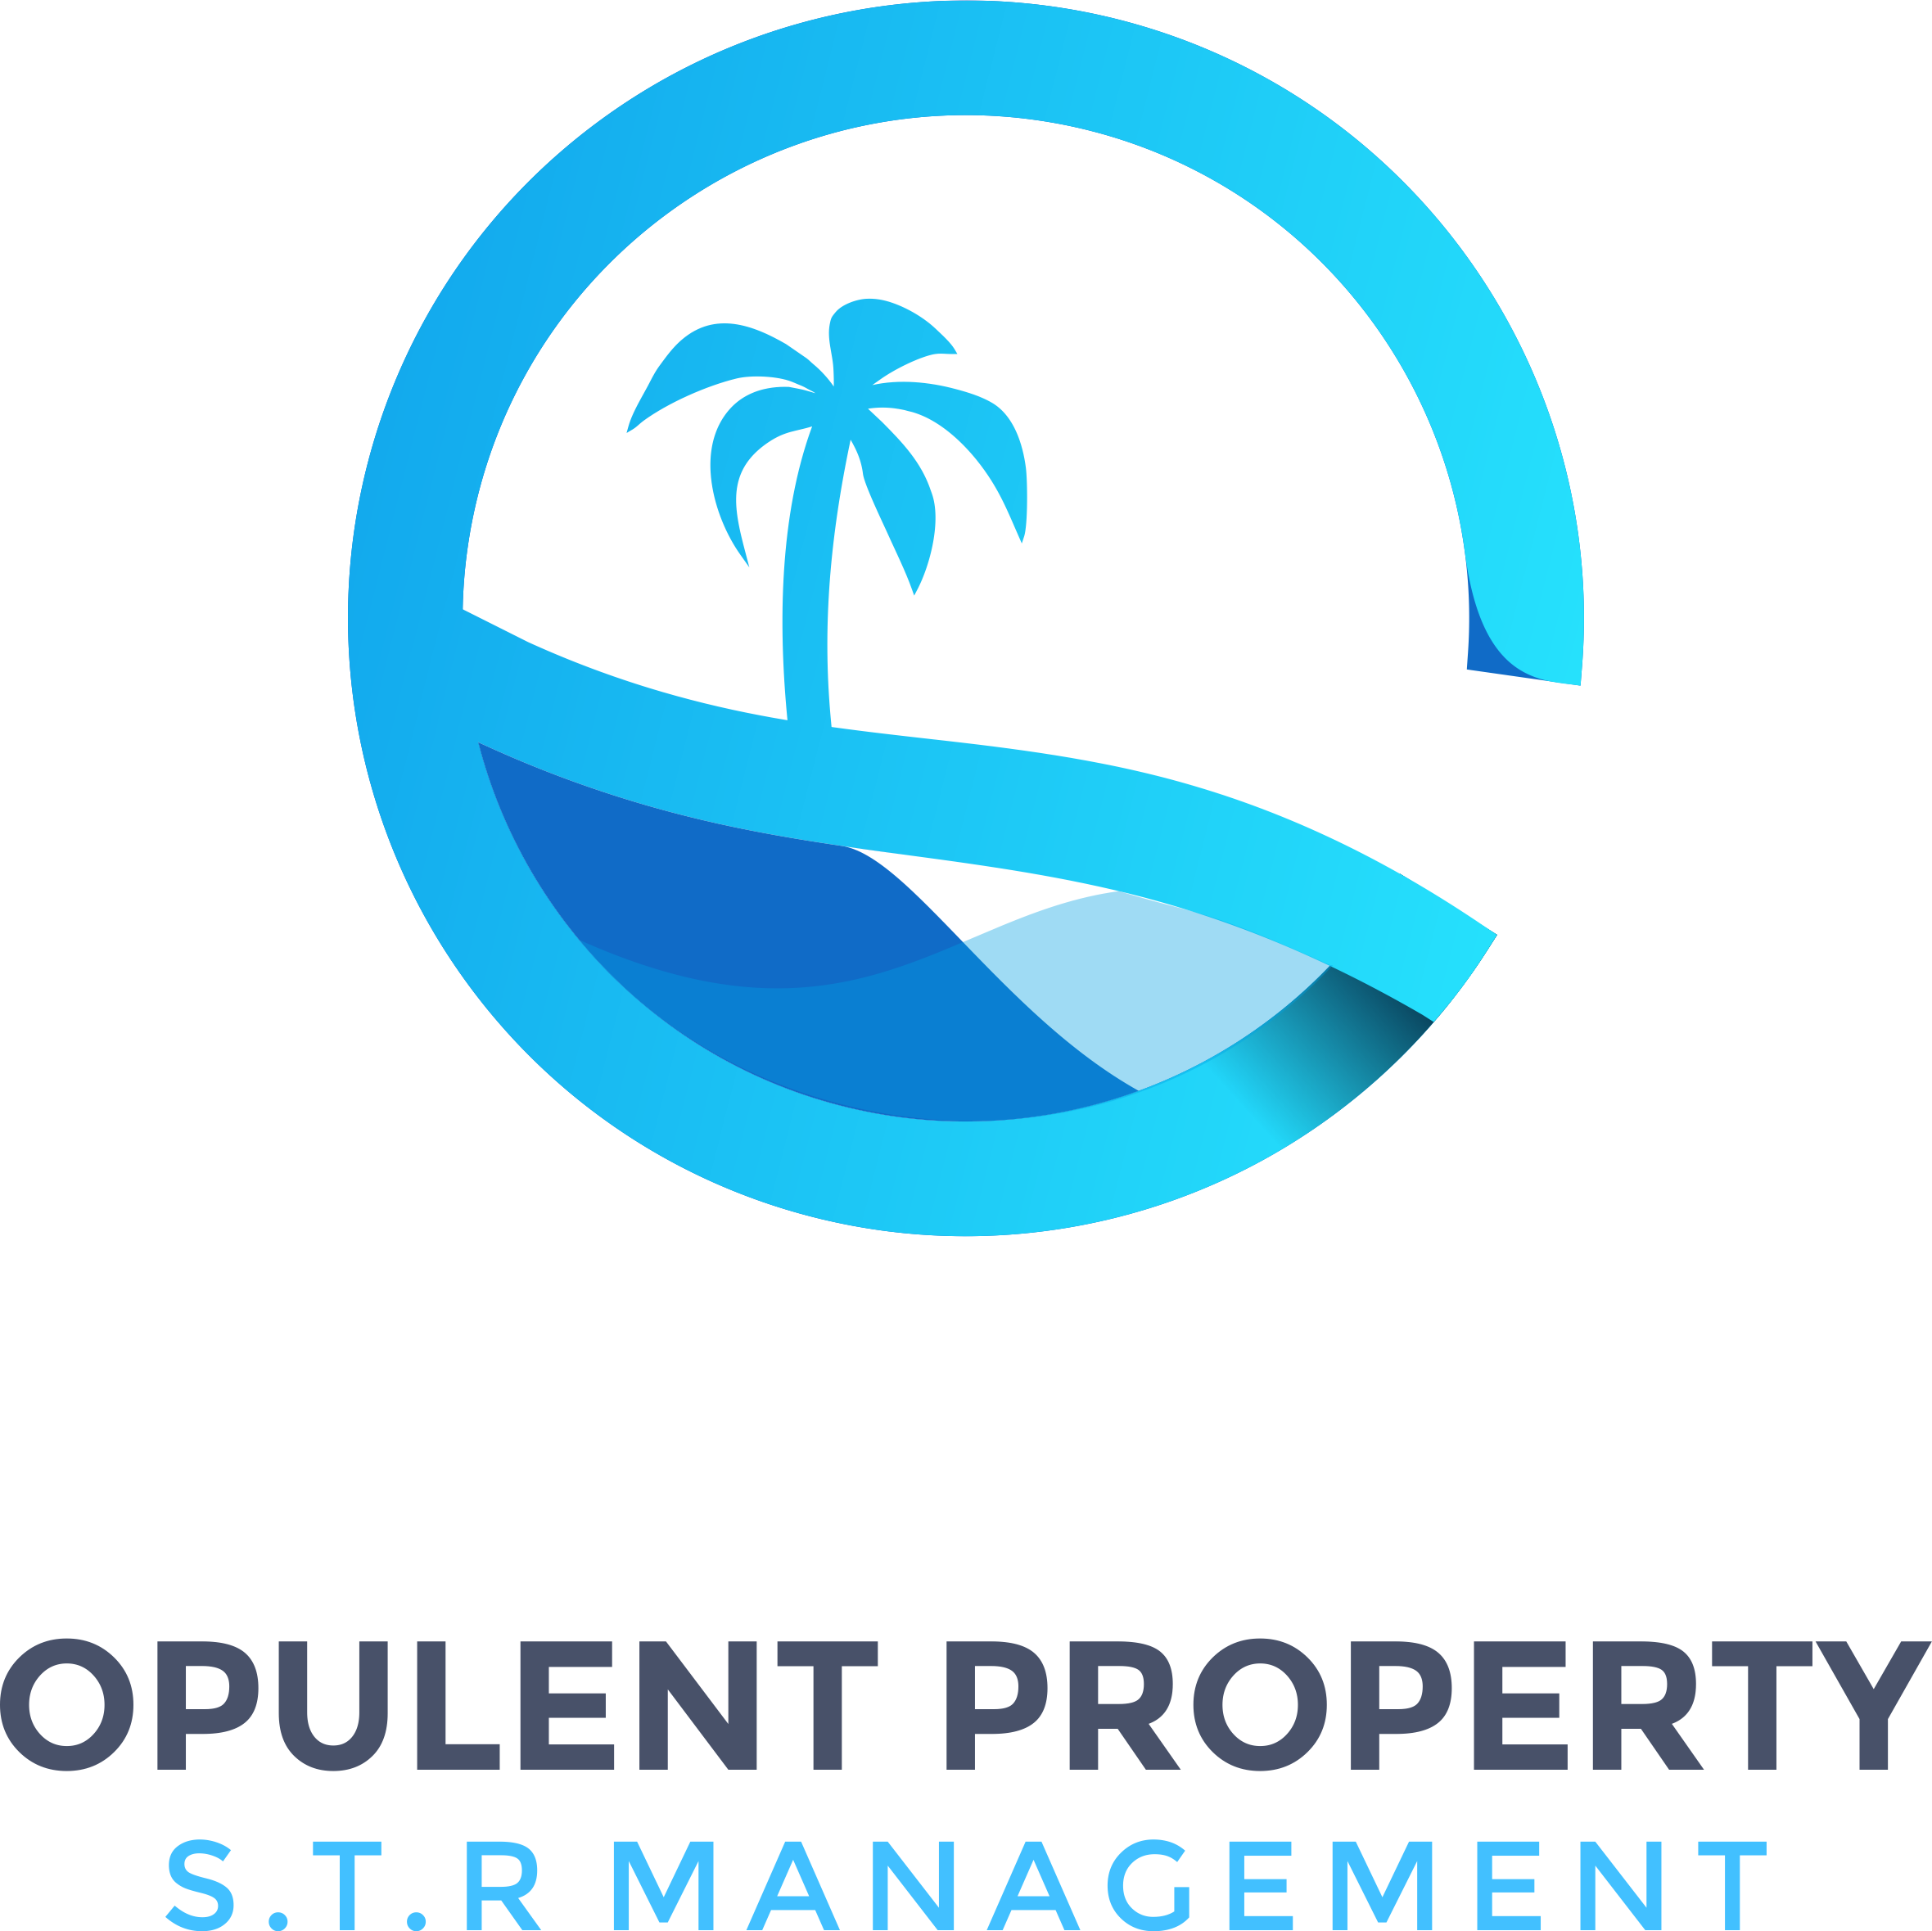 Opulent Property Management brand logo